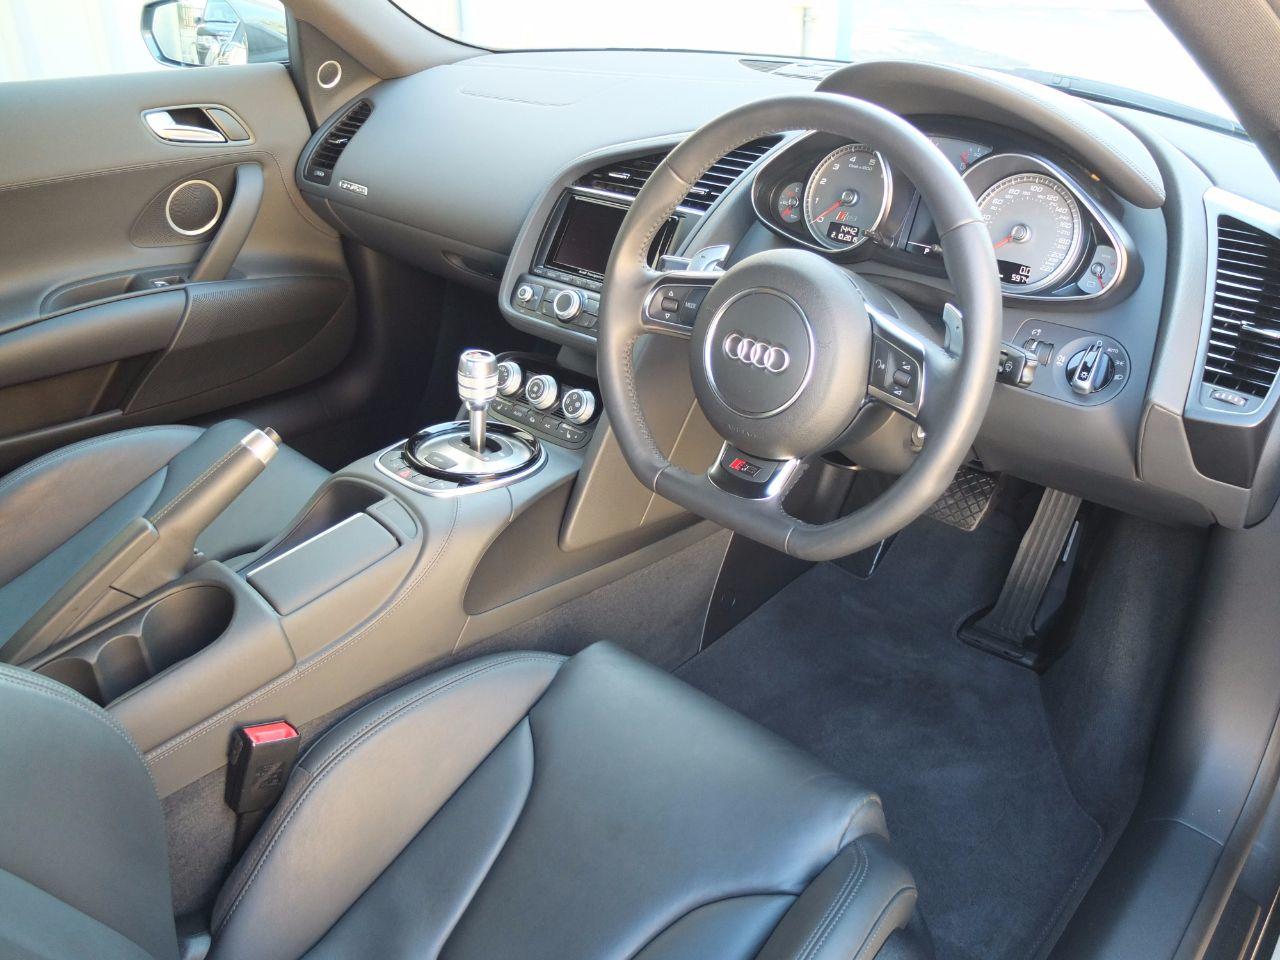 Audi R8 Coupe 4.2 FSI V8 Quattro S Tronic 430ps Coupe Petrol Daytona Grey Metallic, Quartz Grey Side Blades